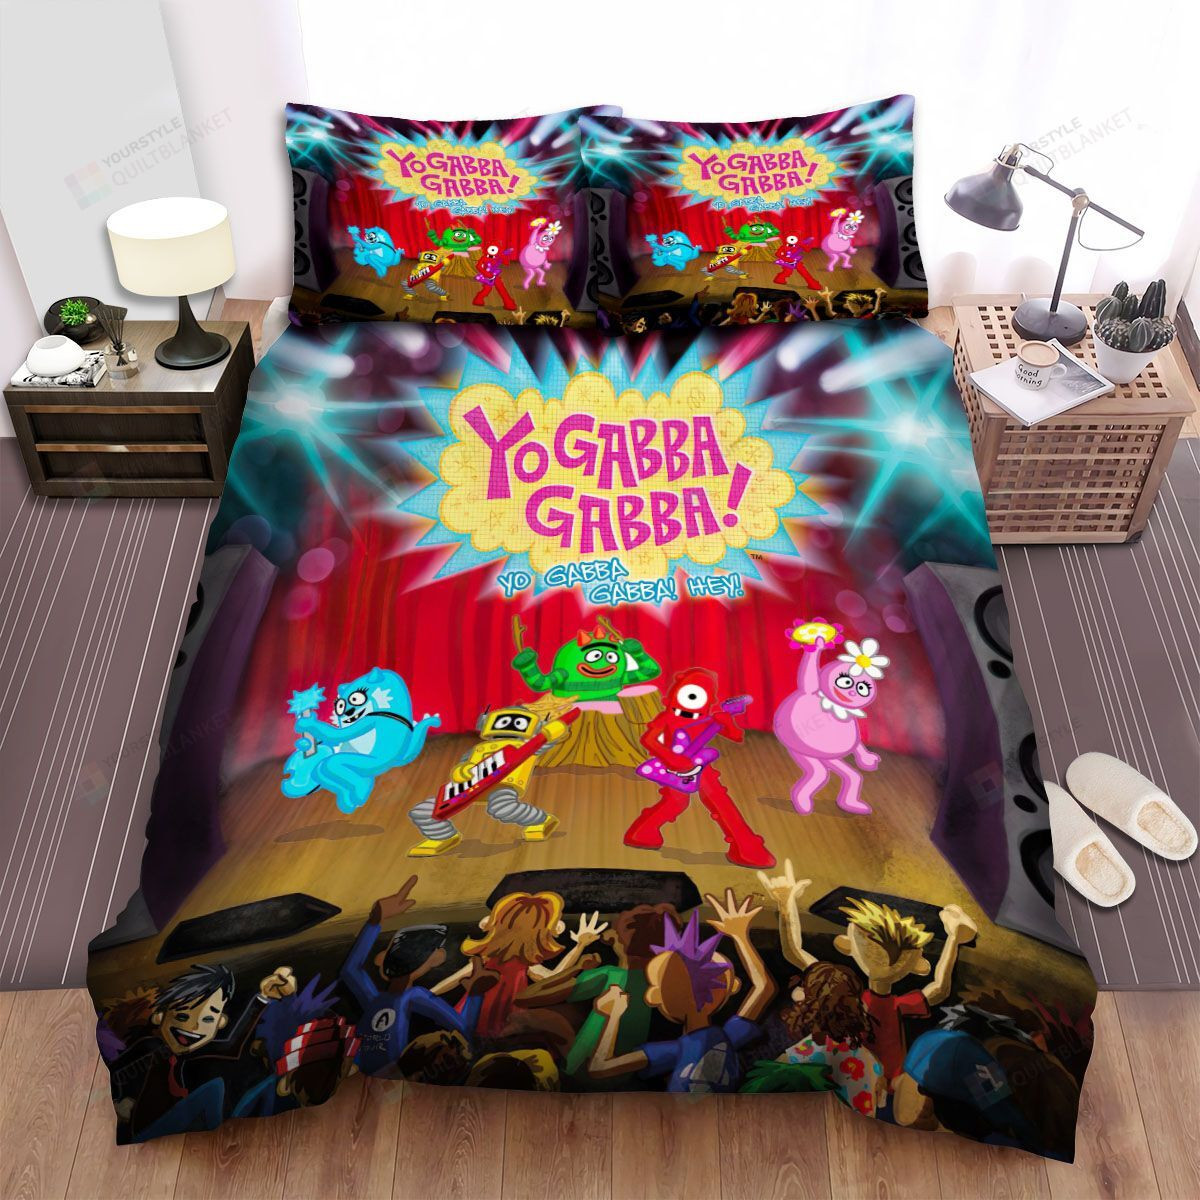 Yo Gabba Gabba! Yo Gabba Gabba Hey Album Bed Sheets Spread Comforter Duvet Cover Bedding Sets